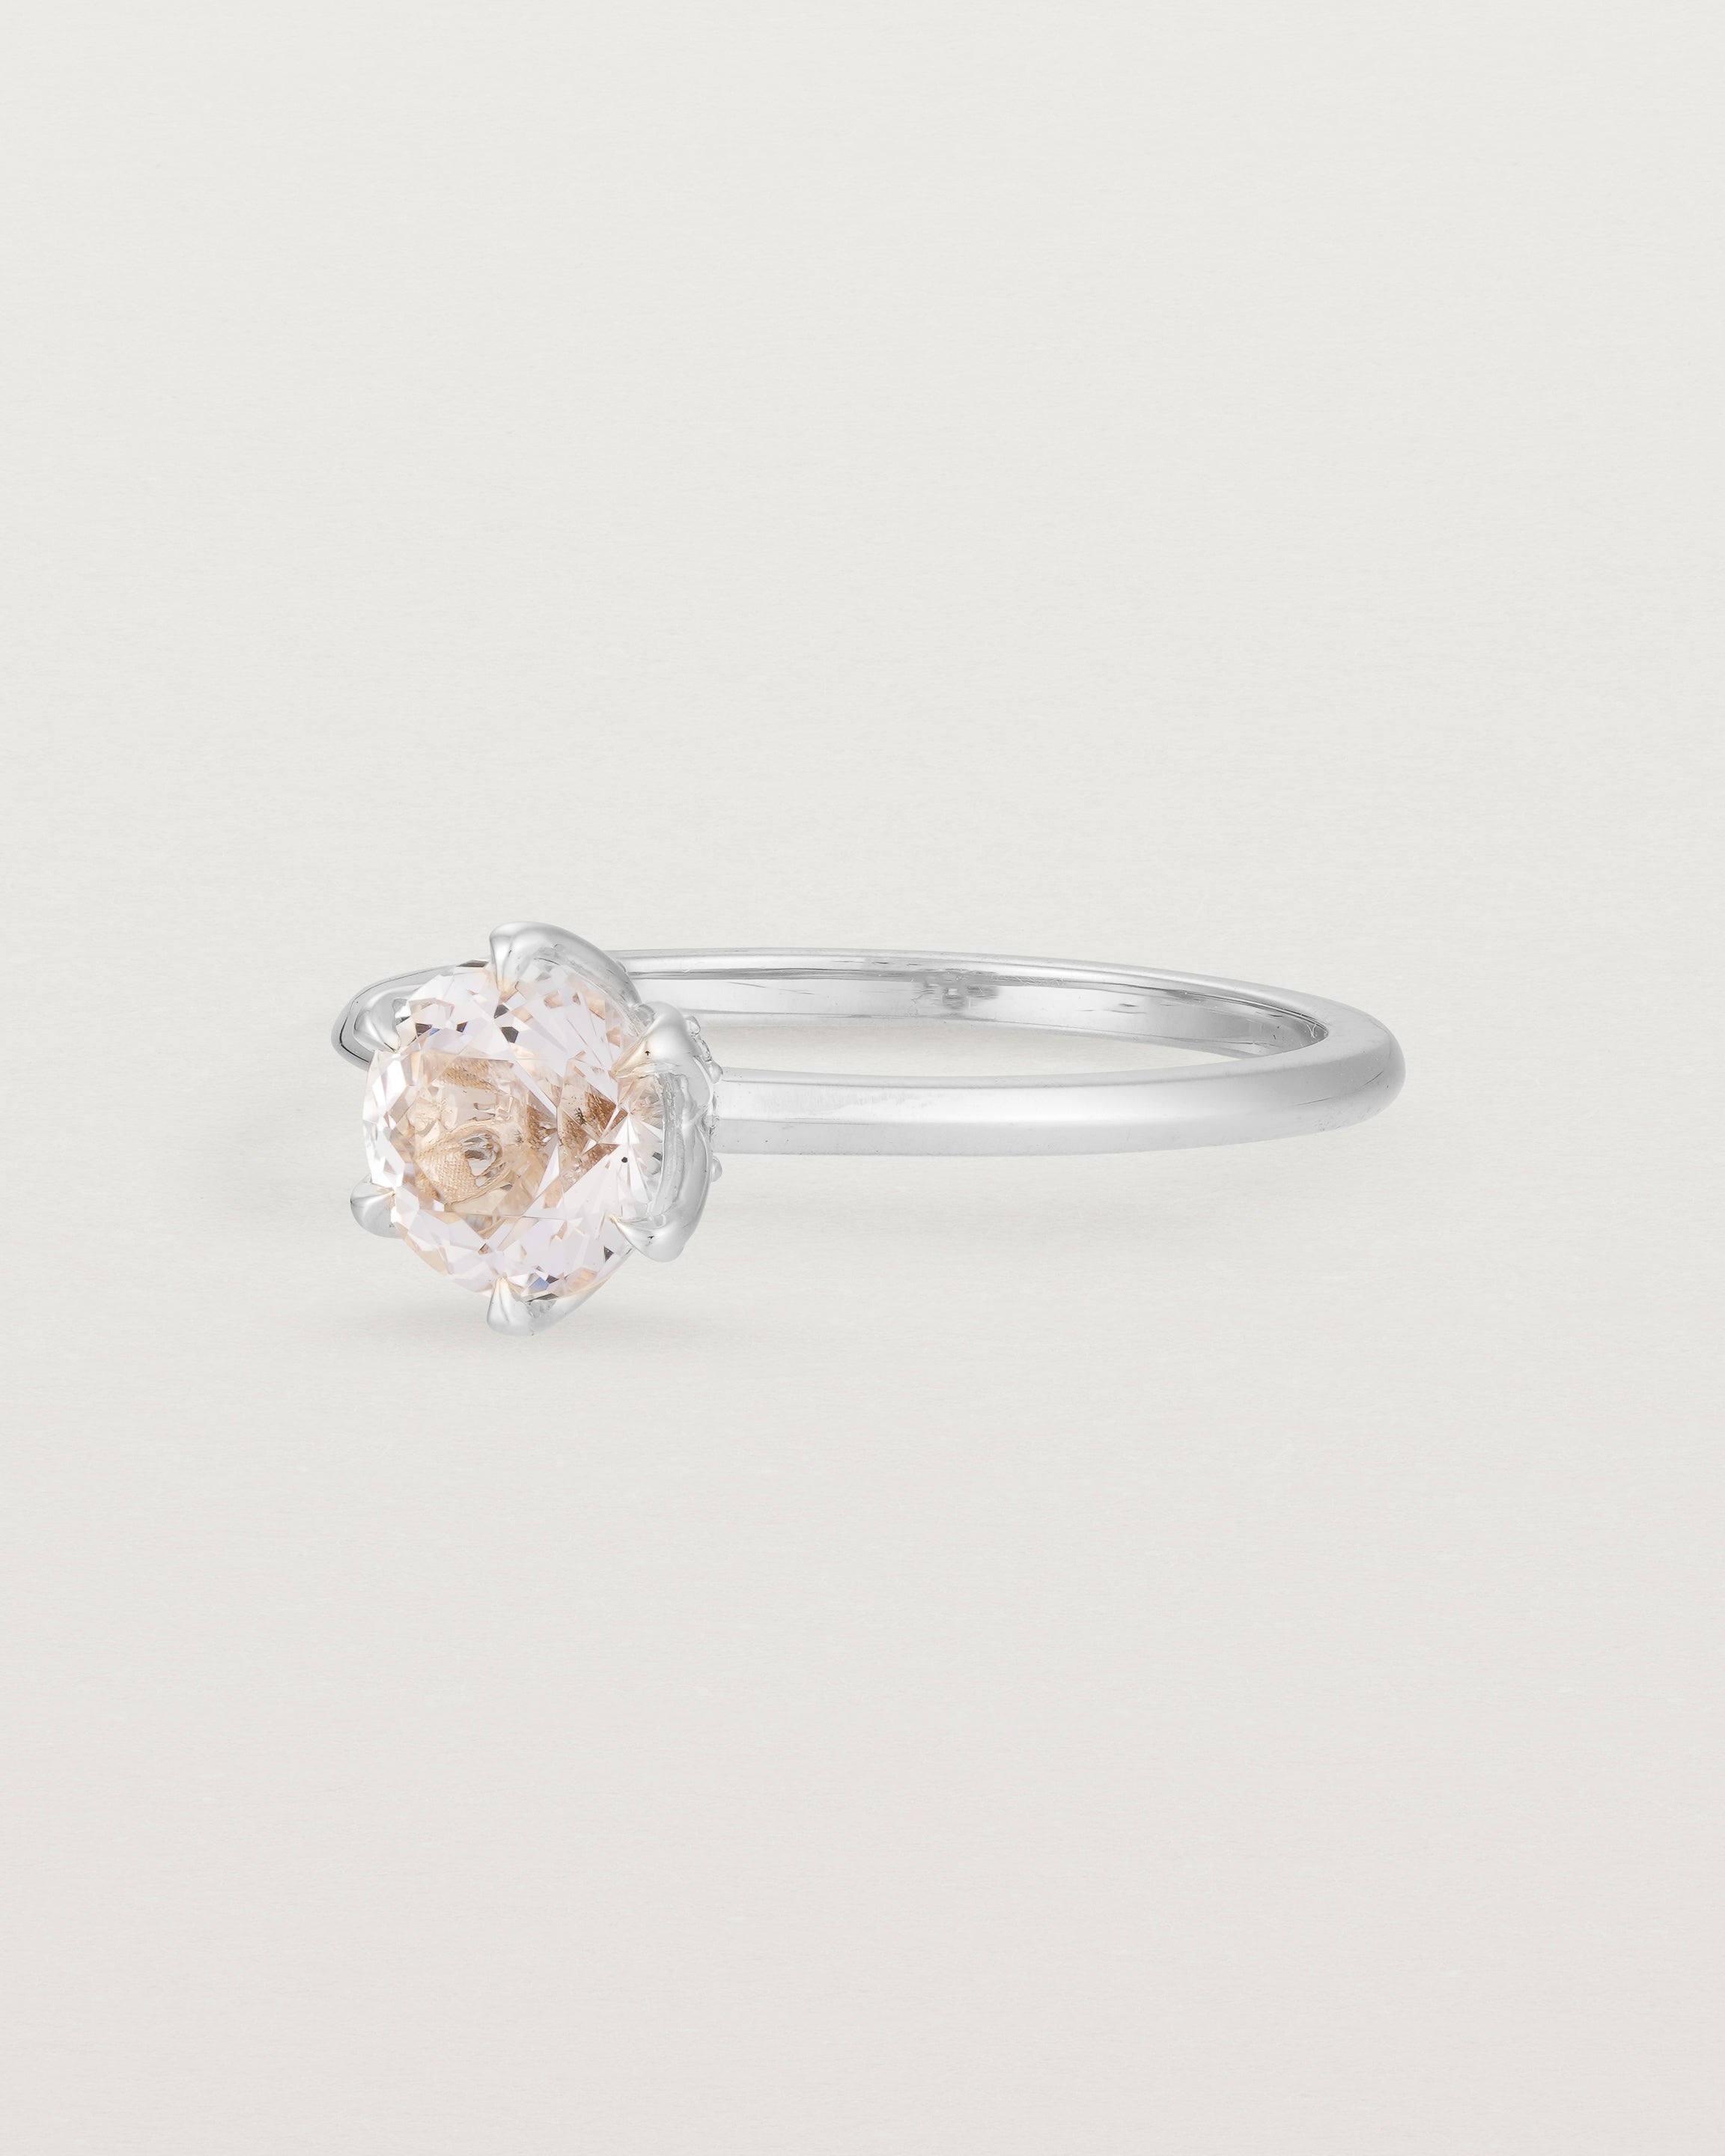 Angled view of the Mandala Solitaire Ring | Morganite & Diamonds | White Gold.